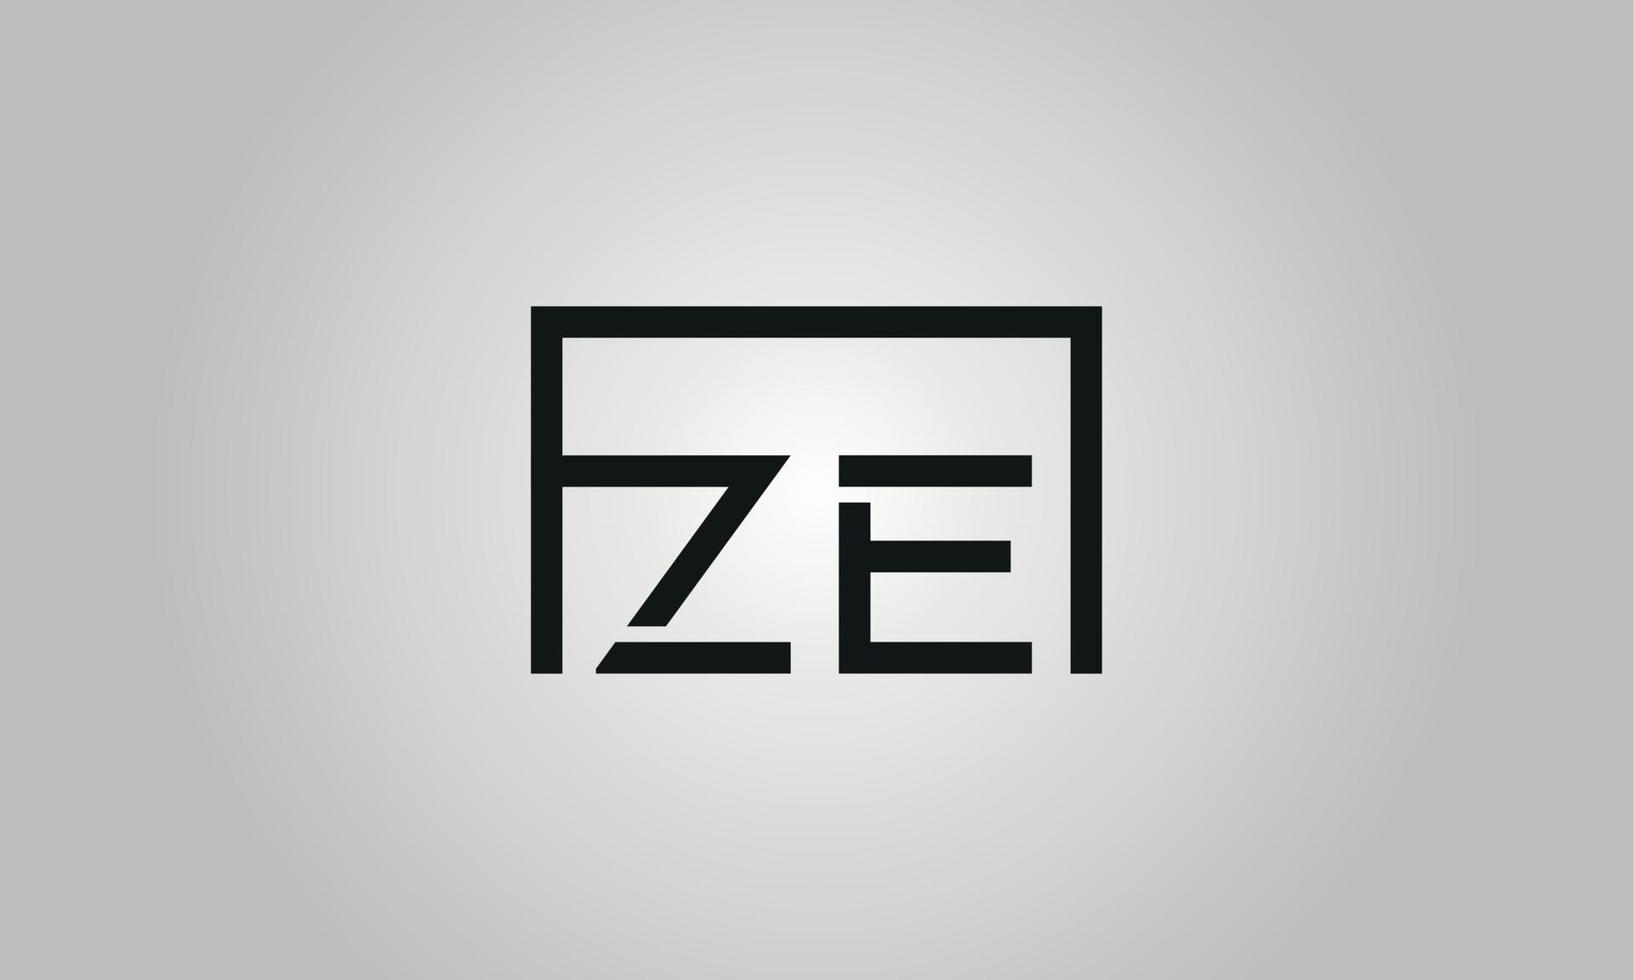 Letter ZE logo design. ZE logo with square shape in black colors vector ...